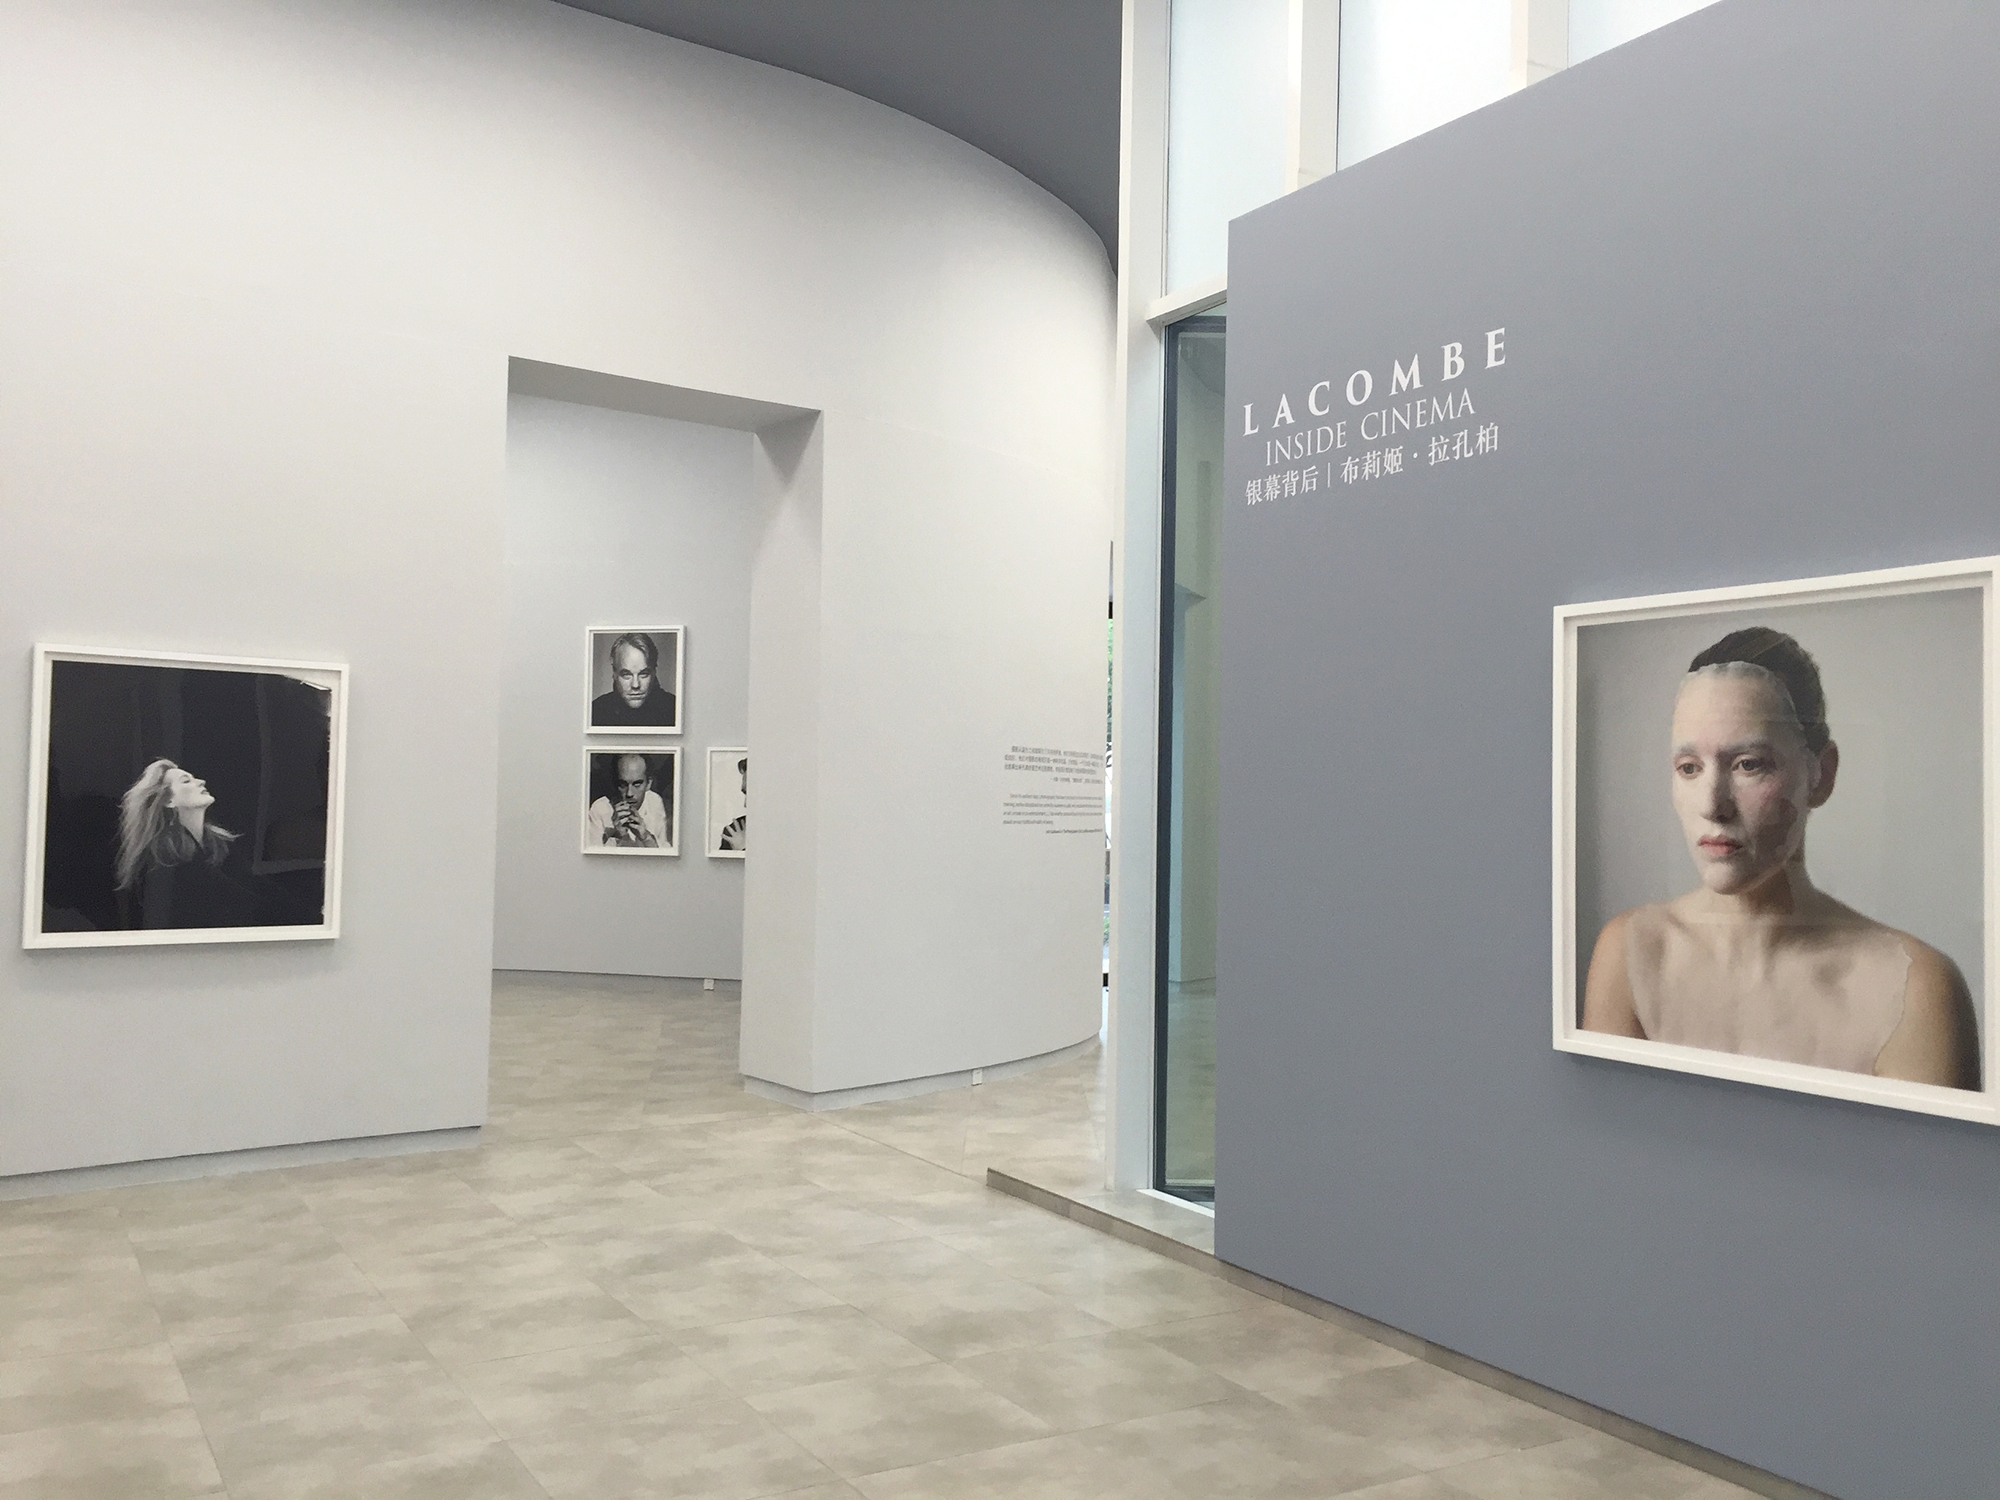 "Brigitte Lacombe Inside Cinema" at the Shanghai Center of Photography, 2016